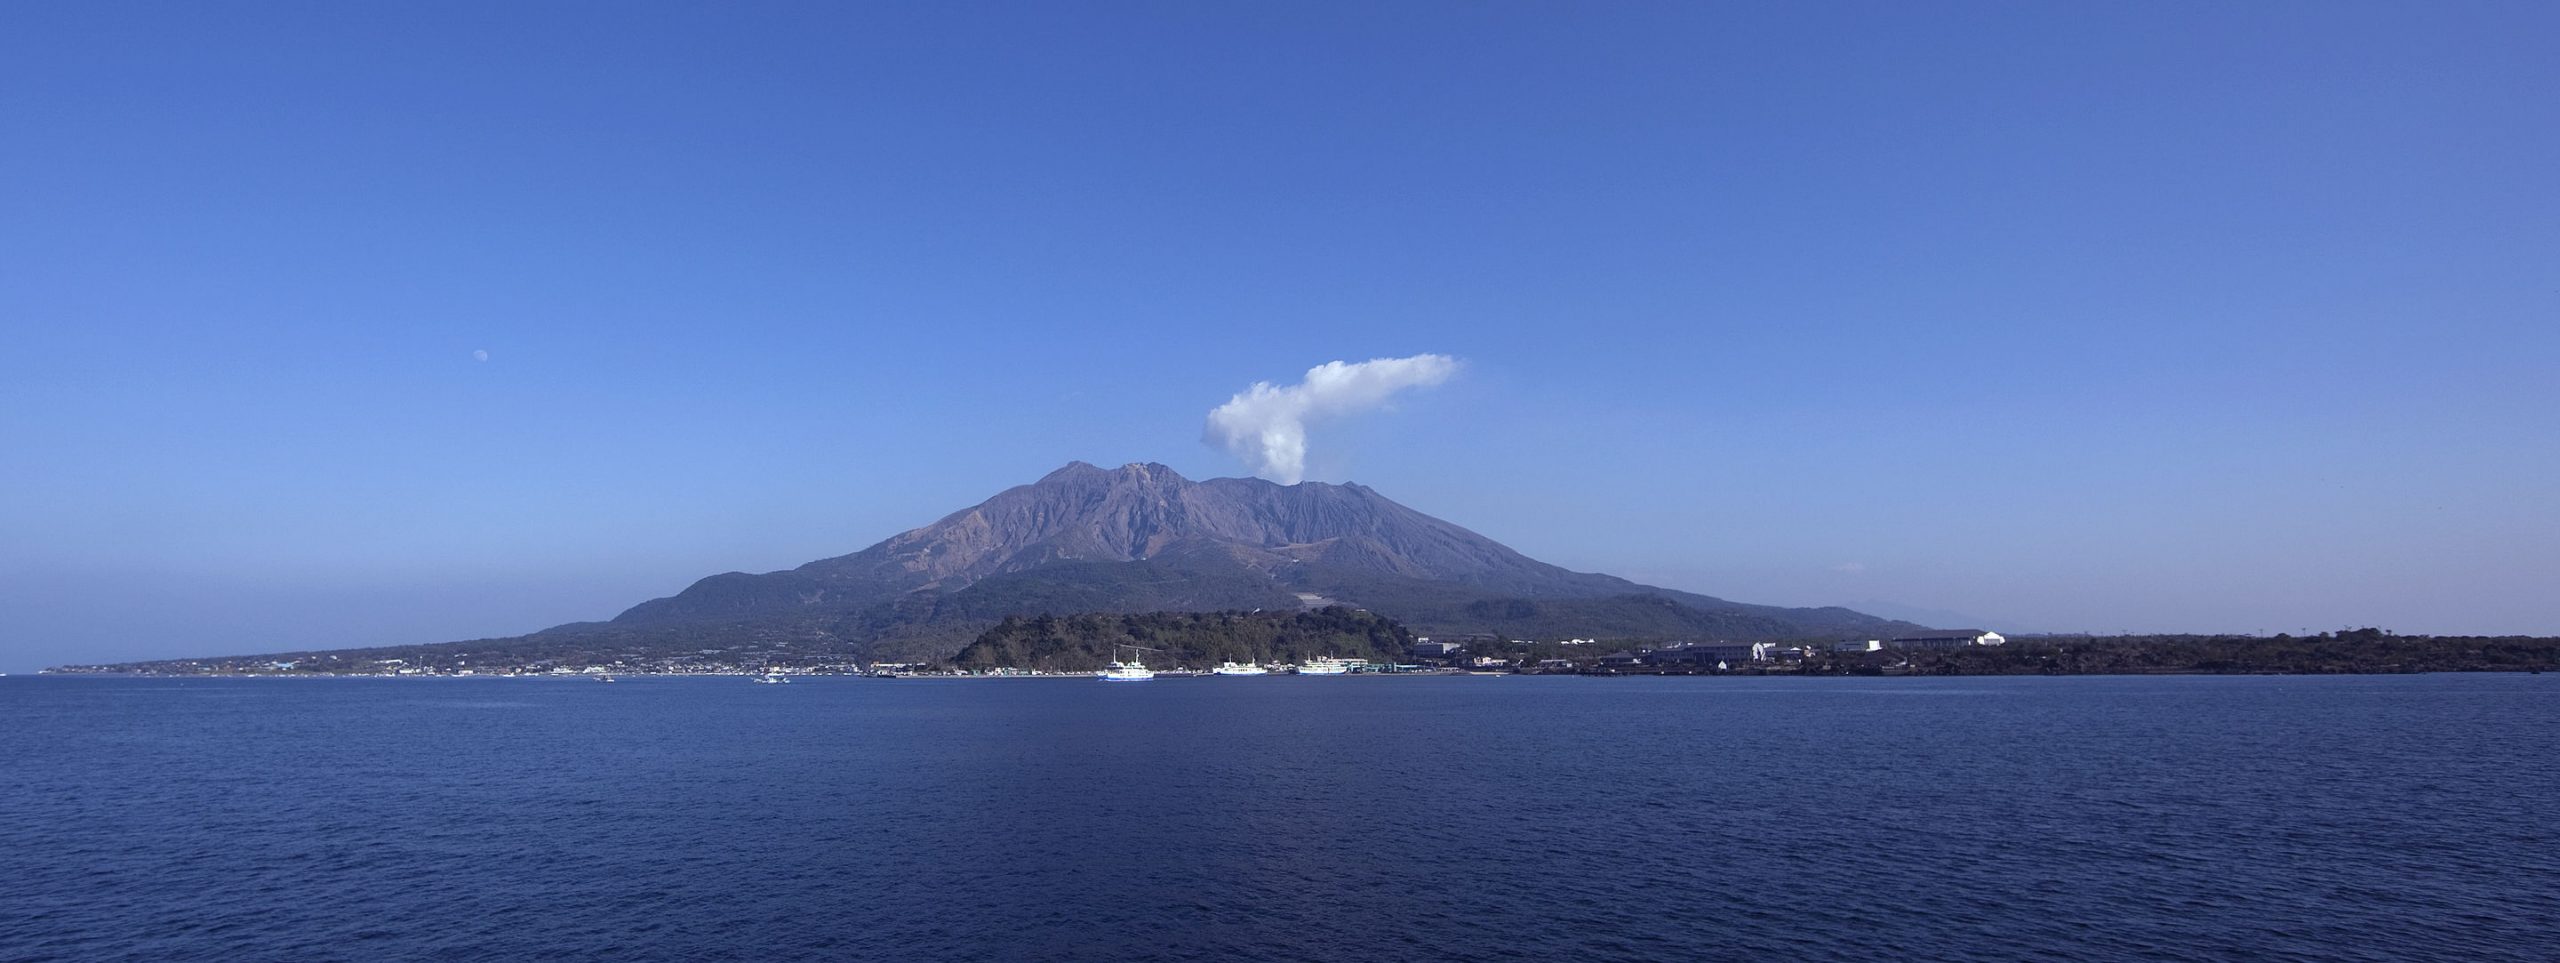 Video af Sakurajima vulkanen i udbrud